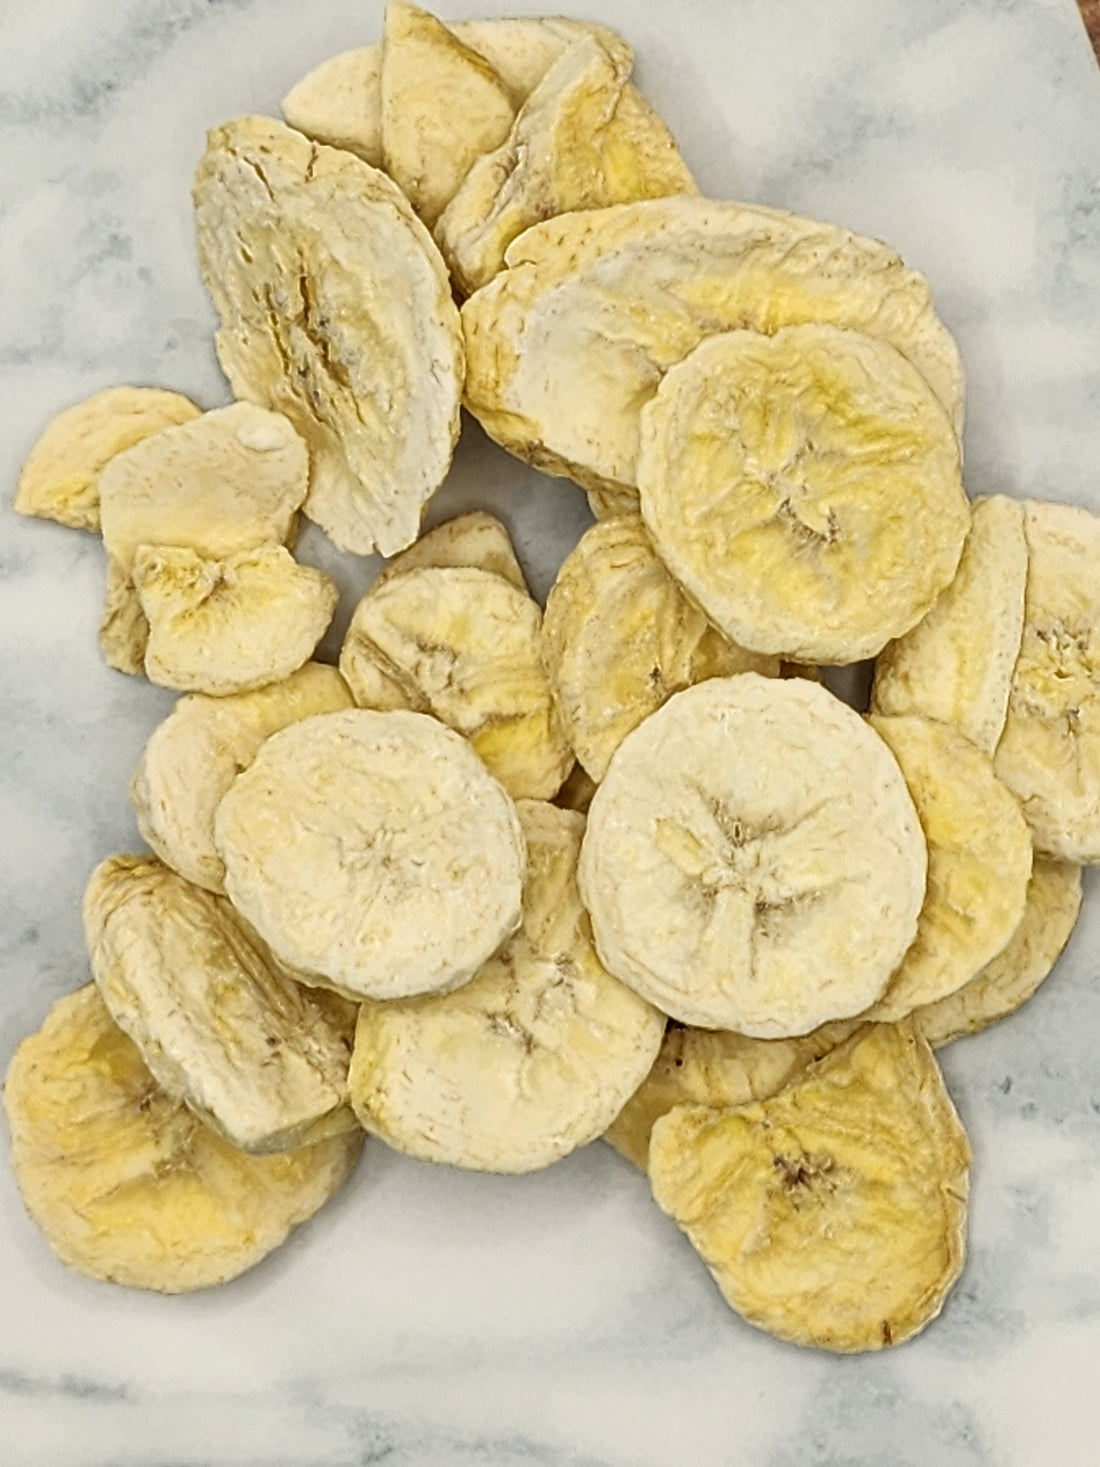 Freeze-dried Banana Slices